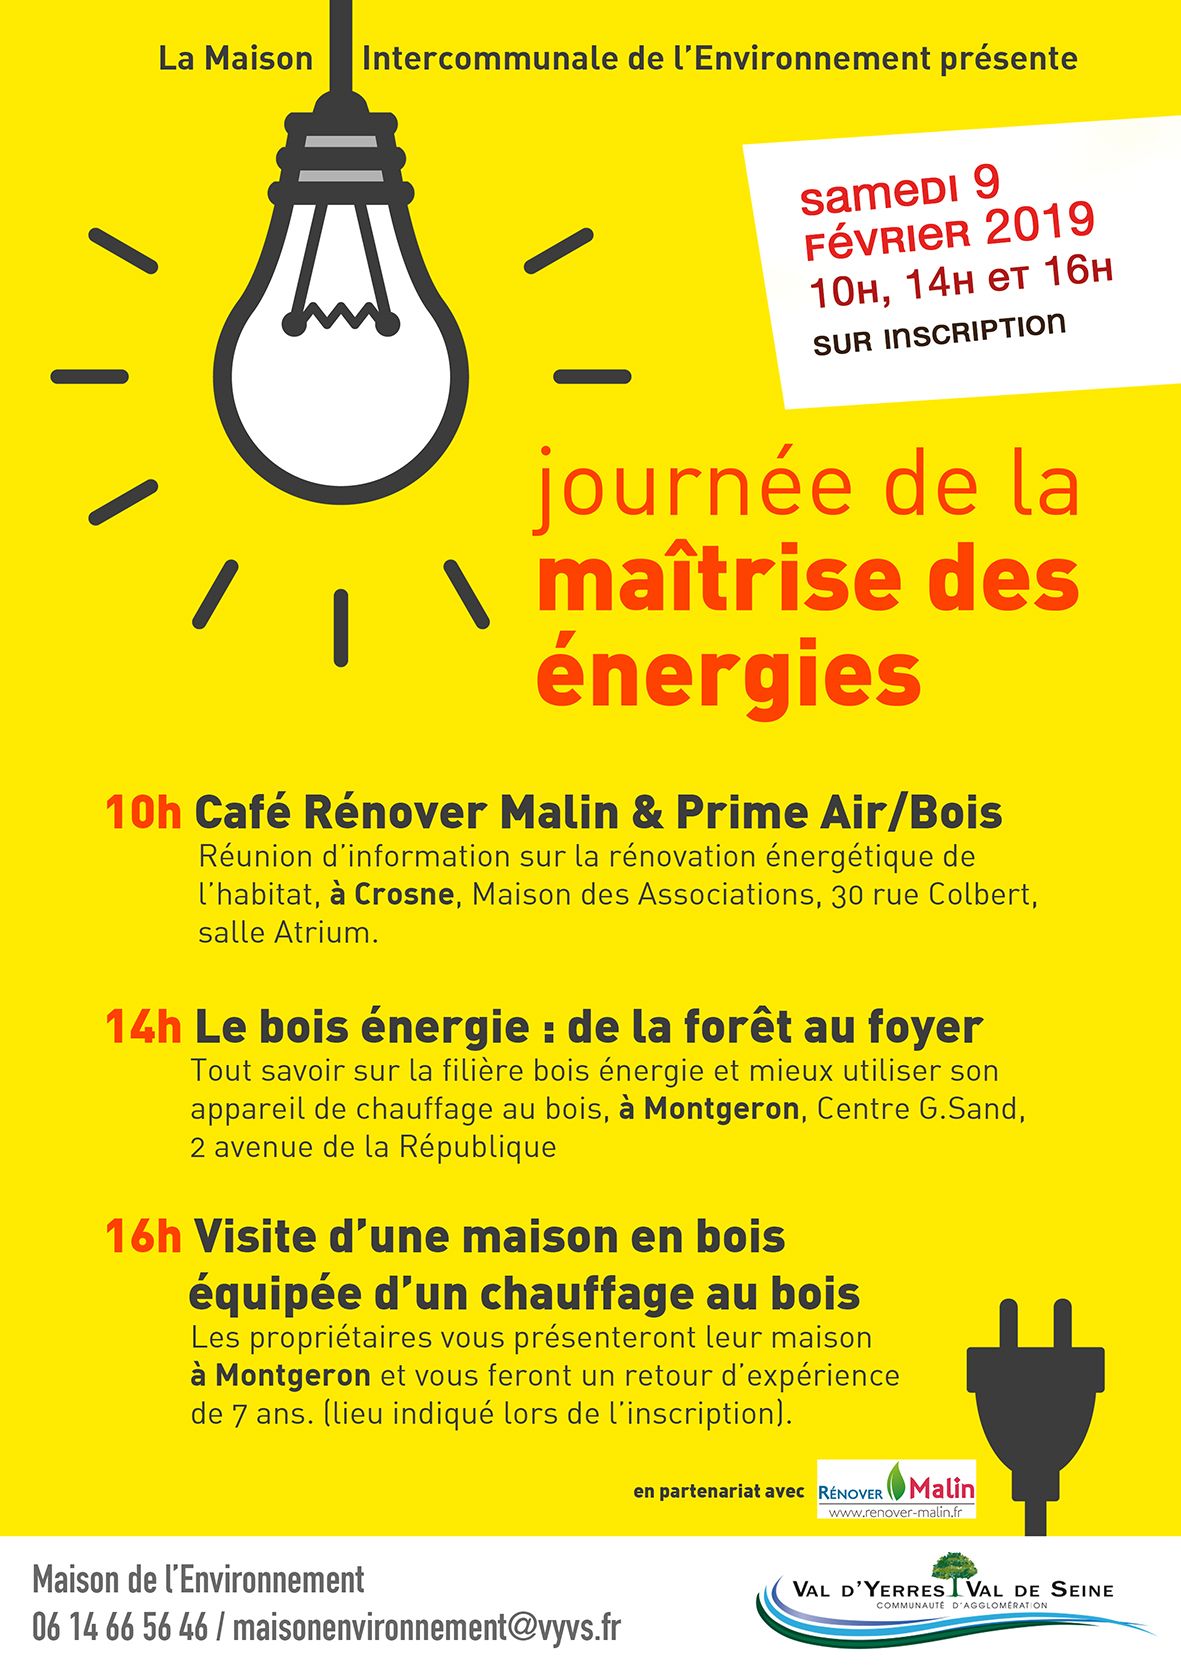 Café Rénover malin - Prime Air/Bois